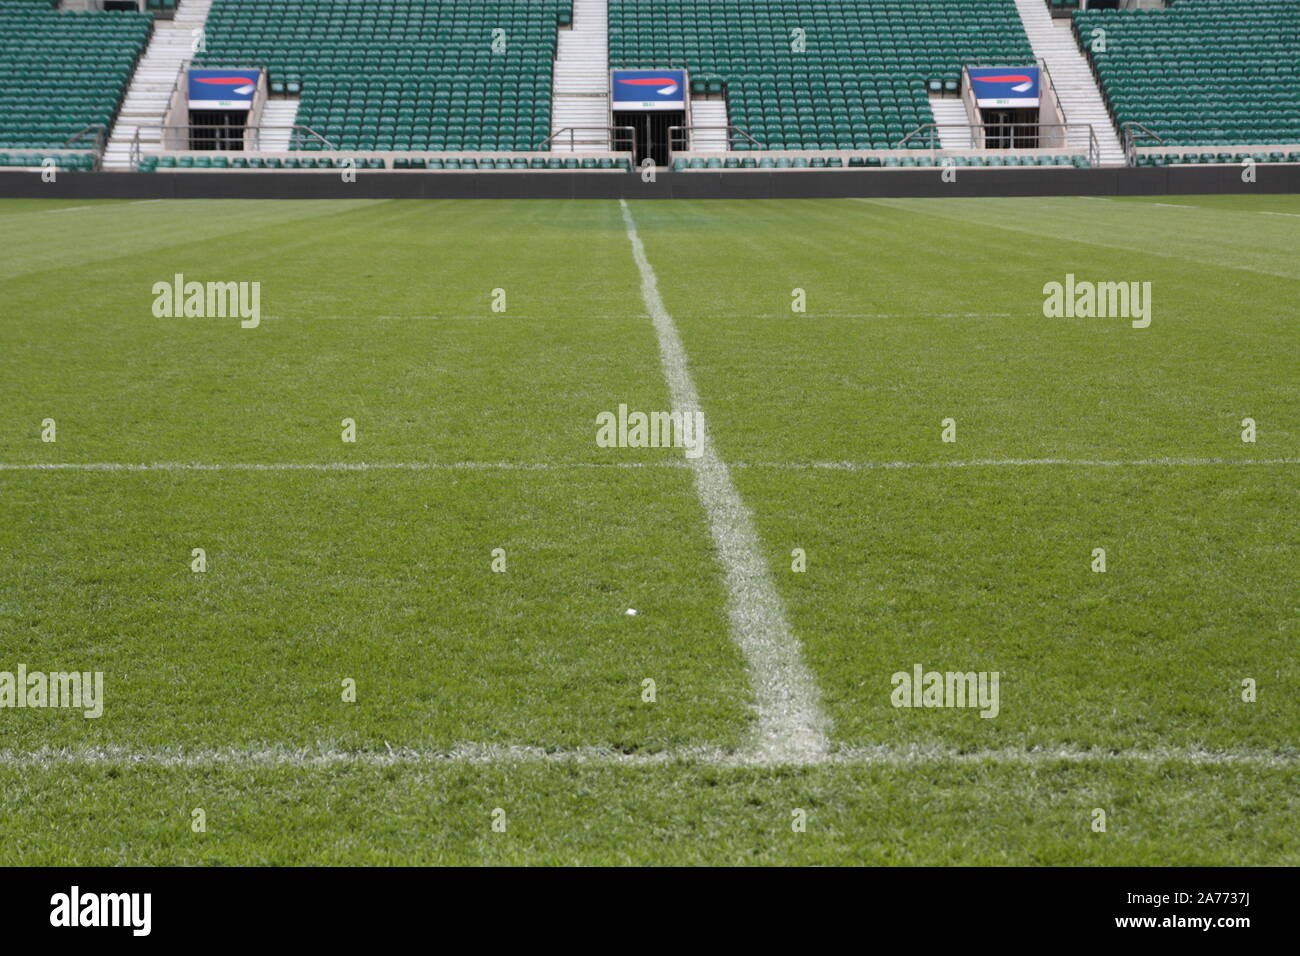 Twickenham stadium pitch central line Stock Photo